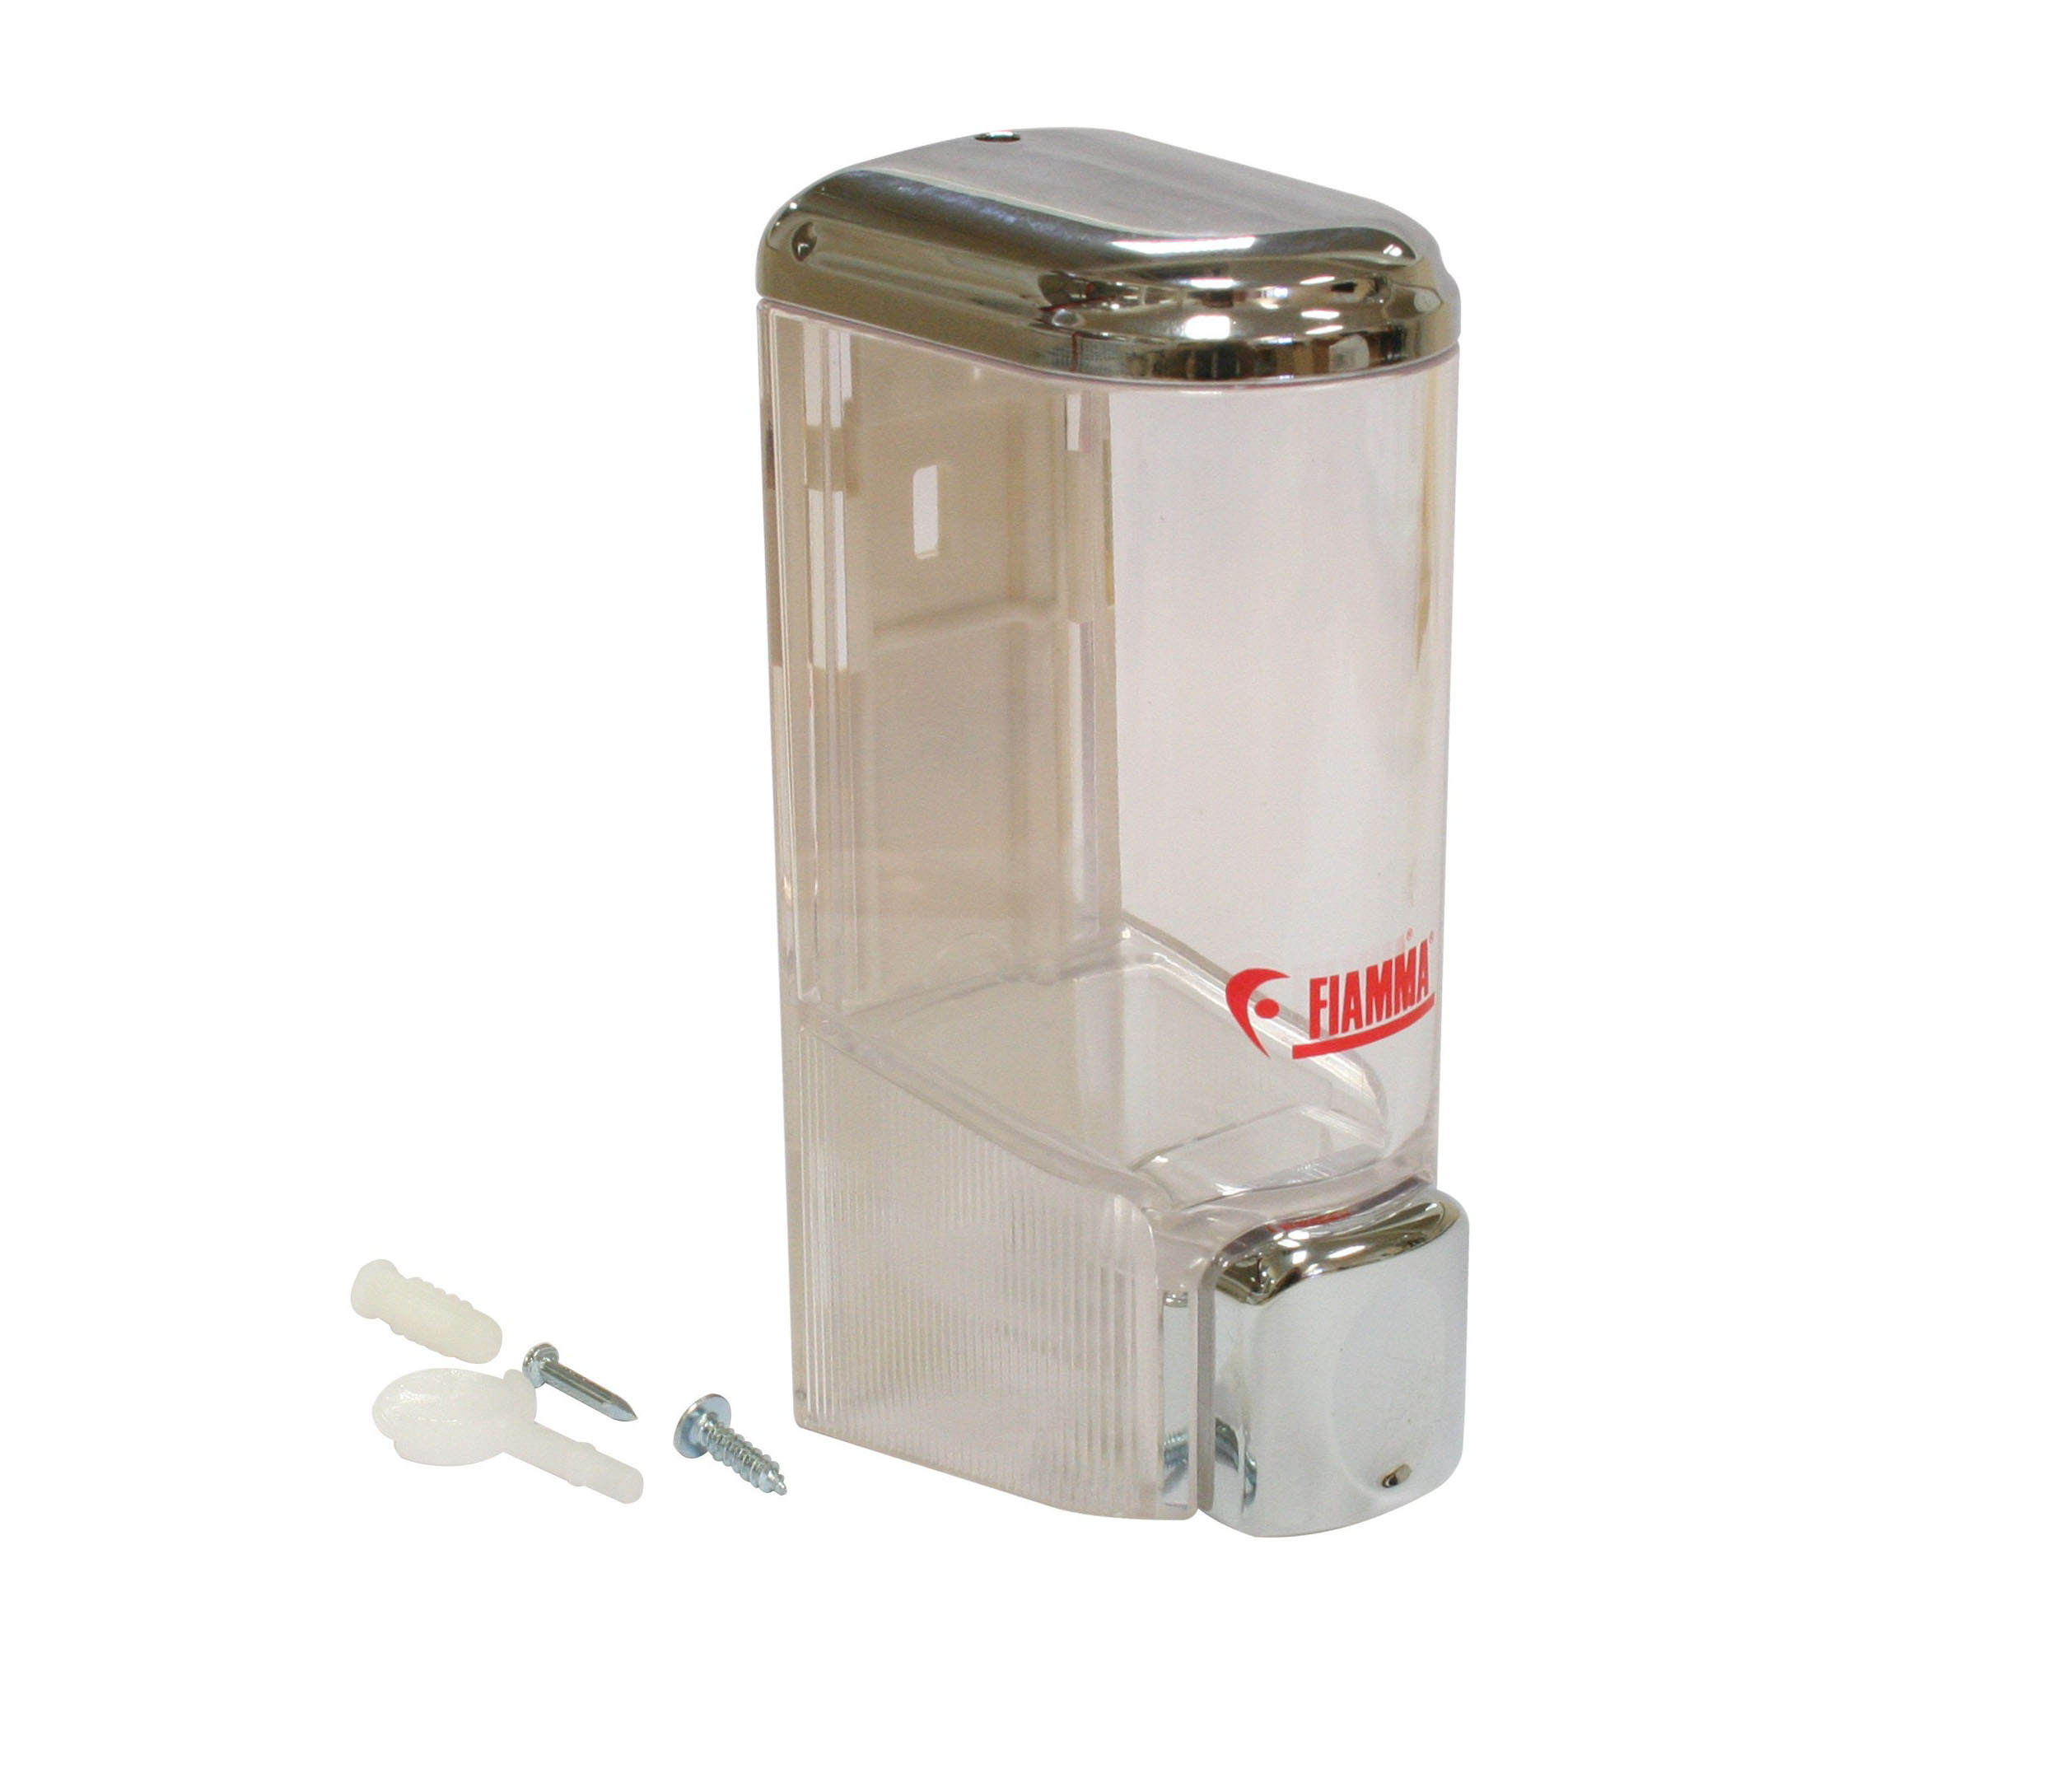 An image of Fiamma Soap Dispenser